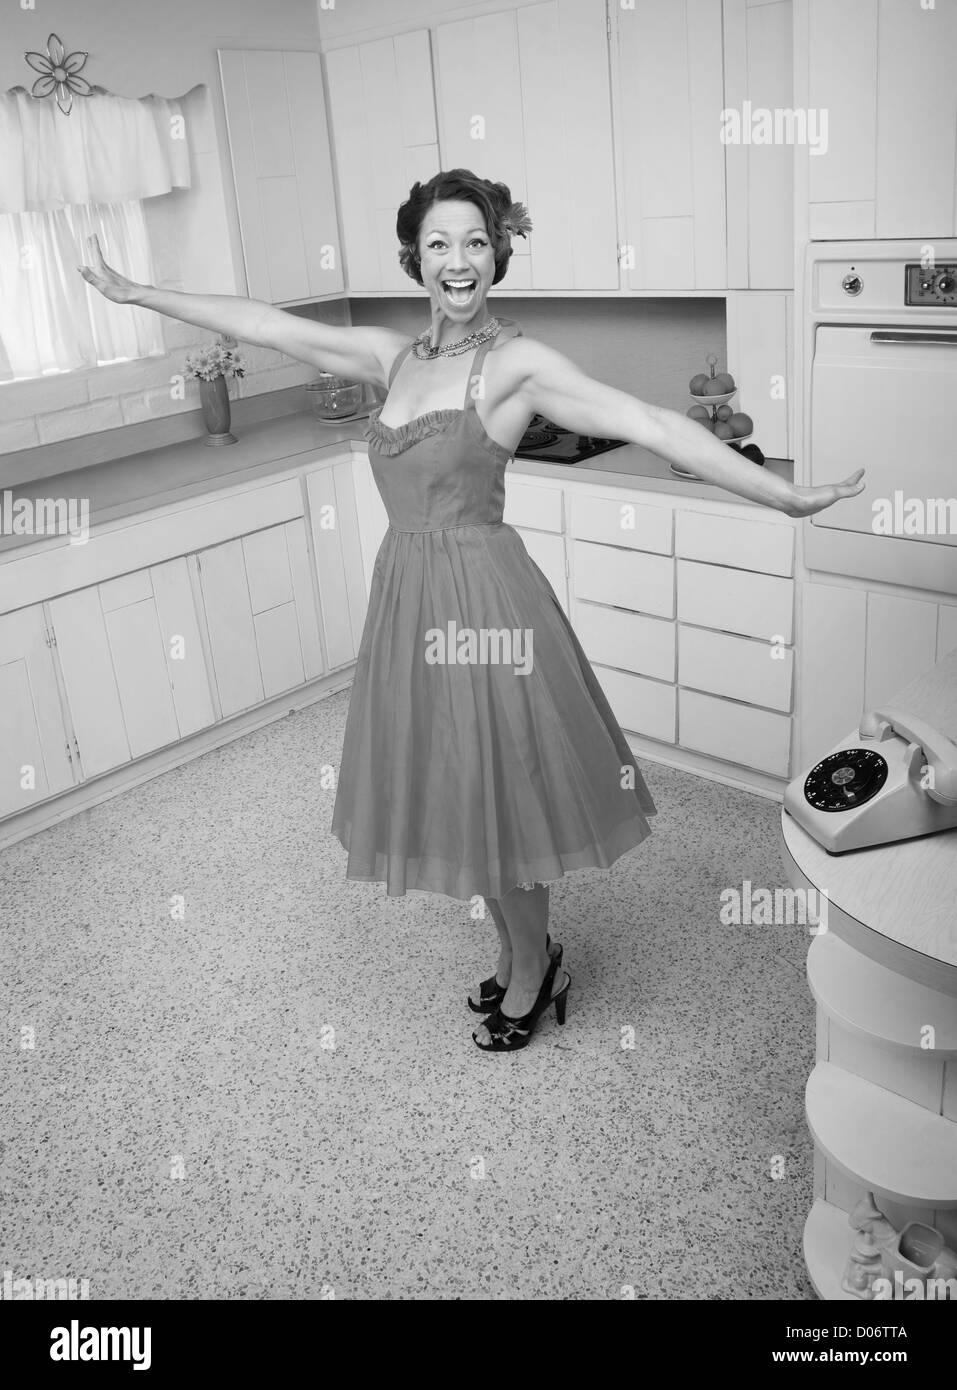 Happy Caucasian woman in a retro styled kitchen scene Stock Photo